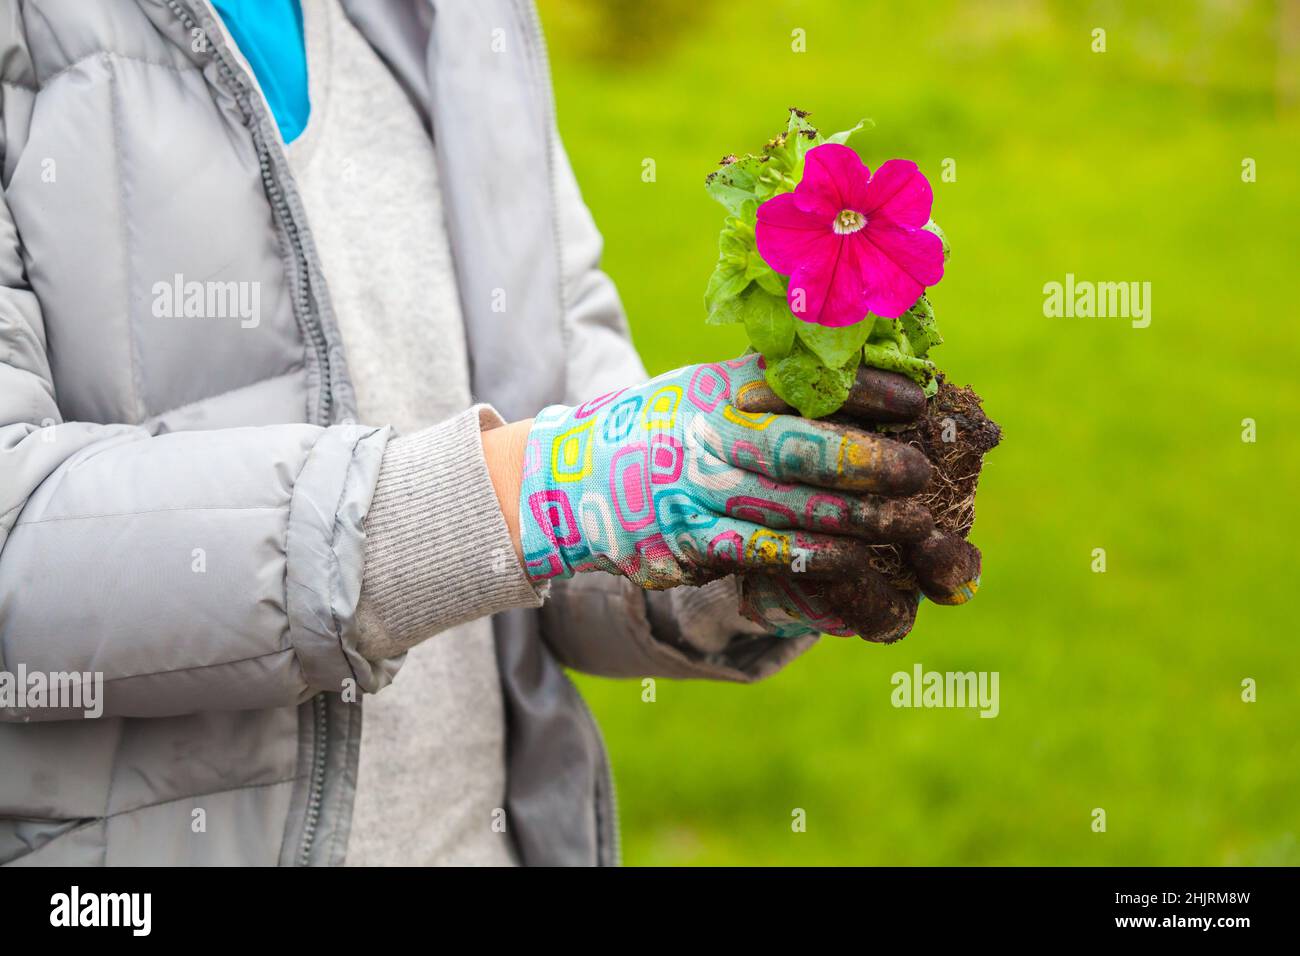 Gärtner hält Petunia Blume, Nahaufnahme mit selektivem Fokus Stockfoto